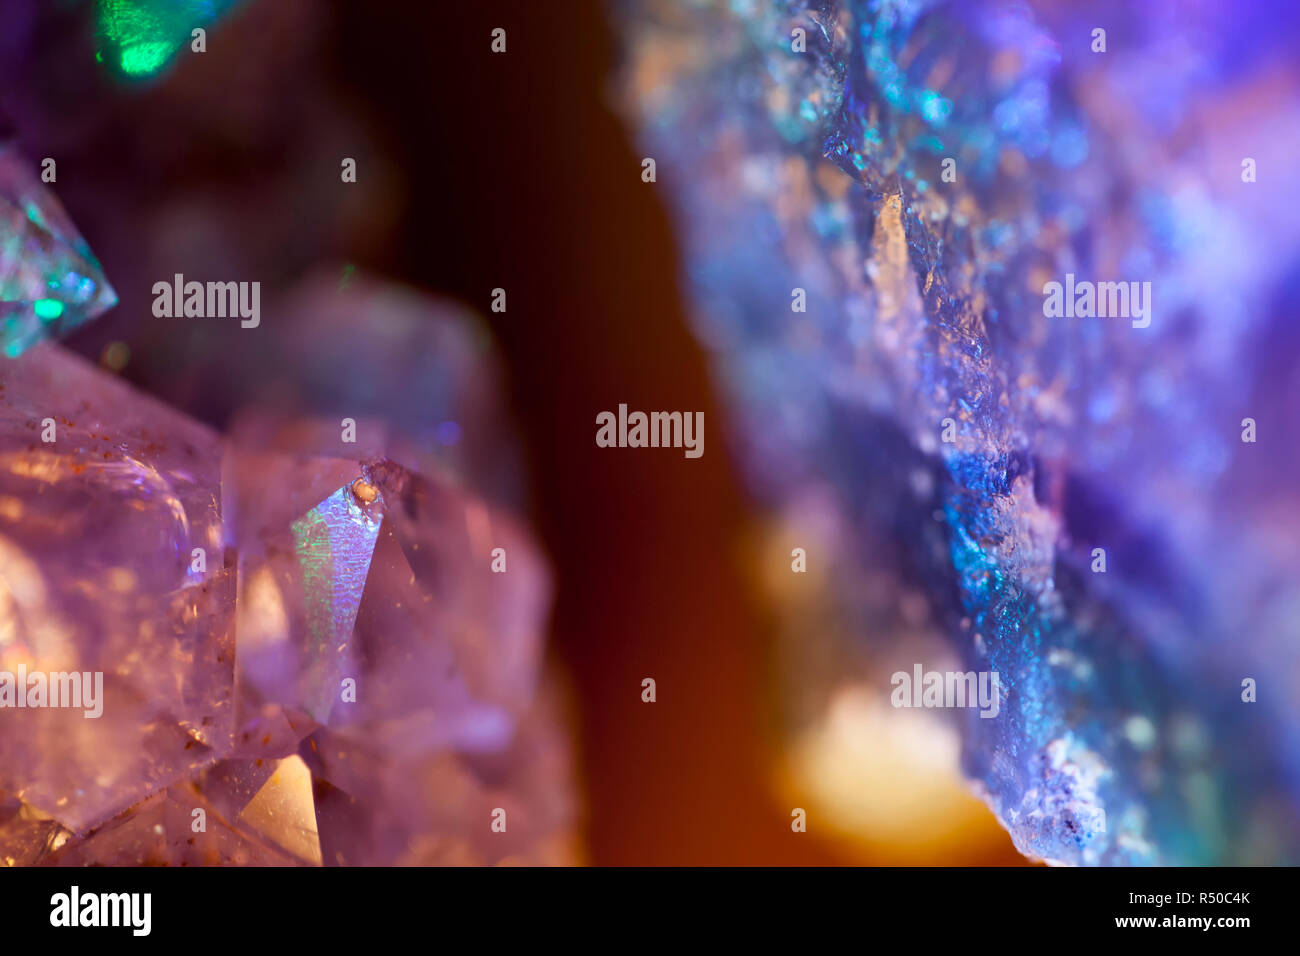 Amethyst & Ocean Jasper crystal specimens shot using beautiful lighting.Gemstone detail. Stock Photo